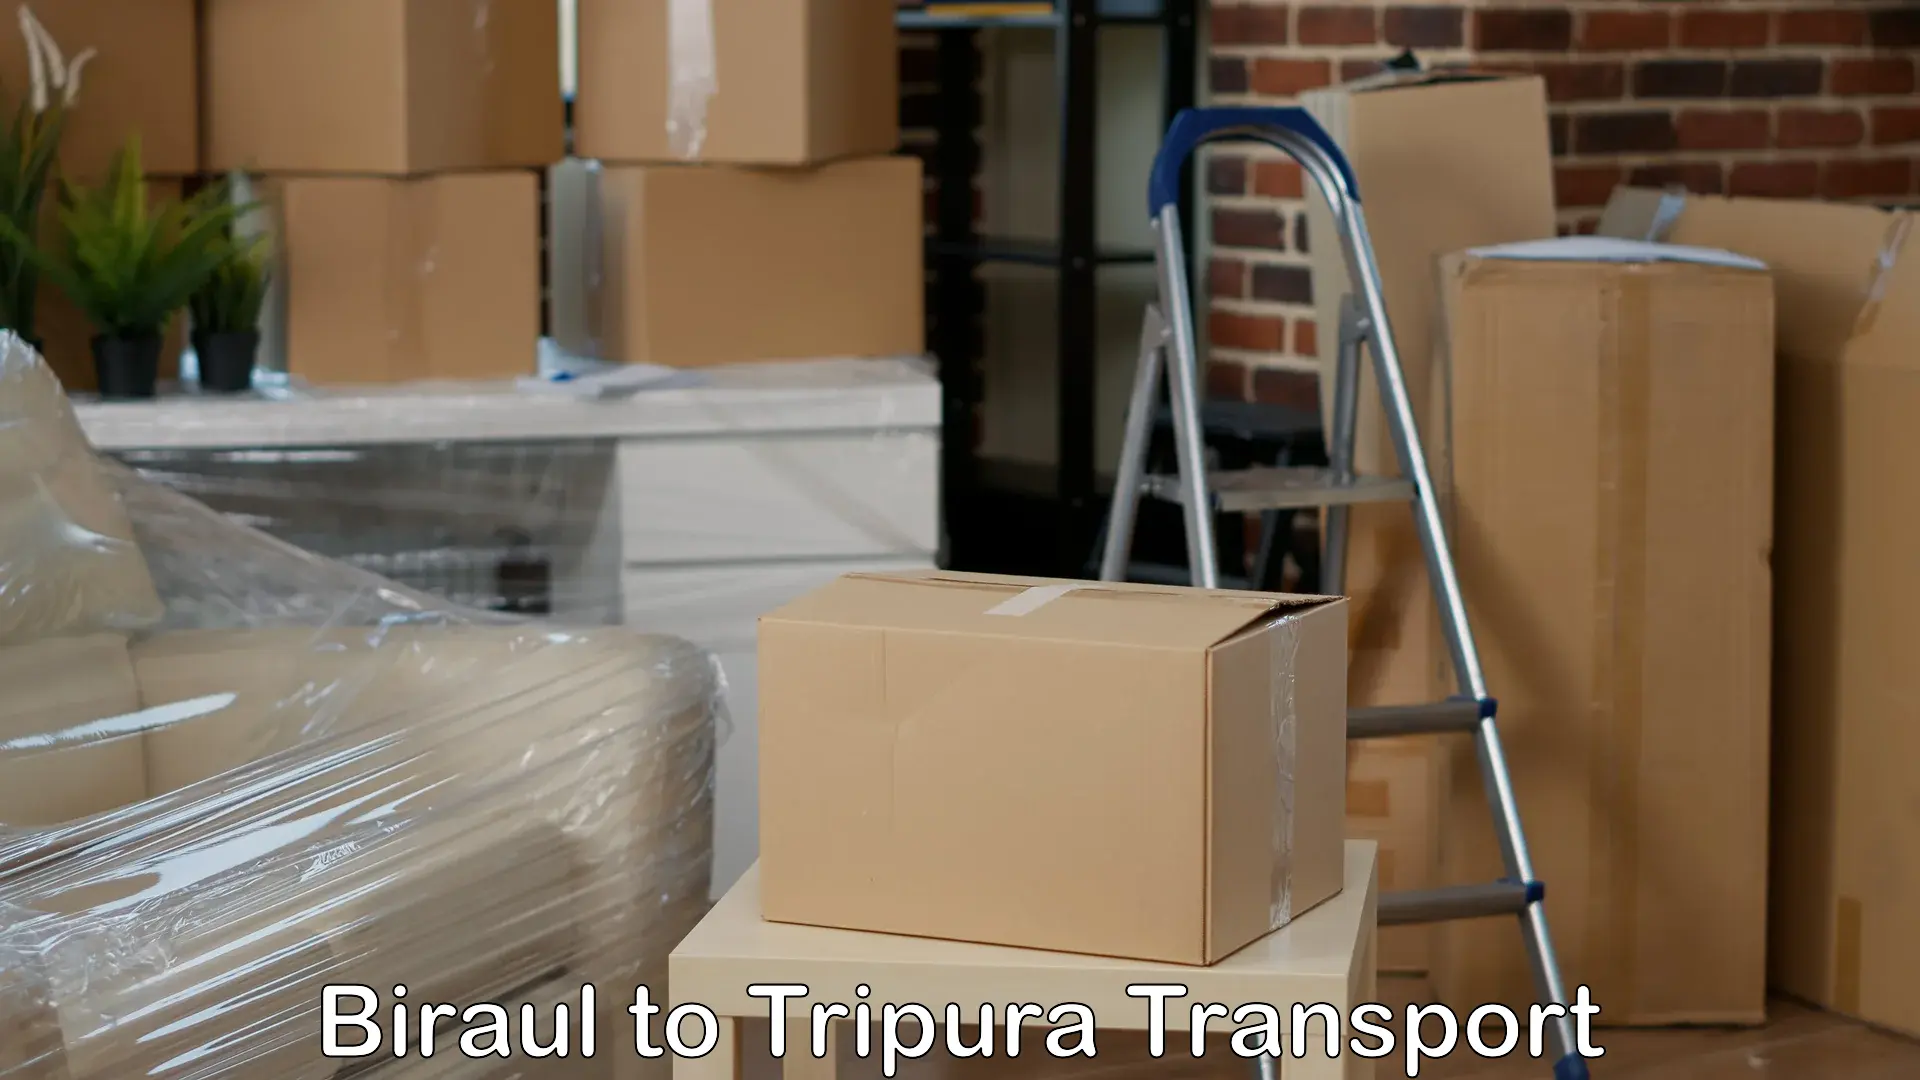 Cargo train transport services in Biraul to Udaipur Tripura